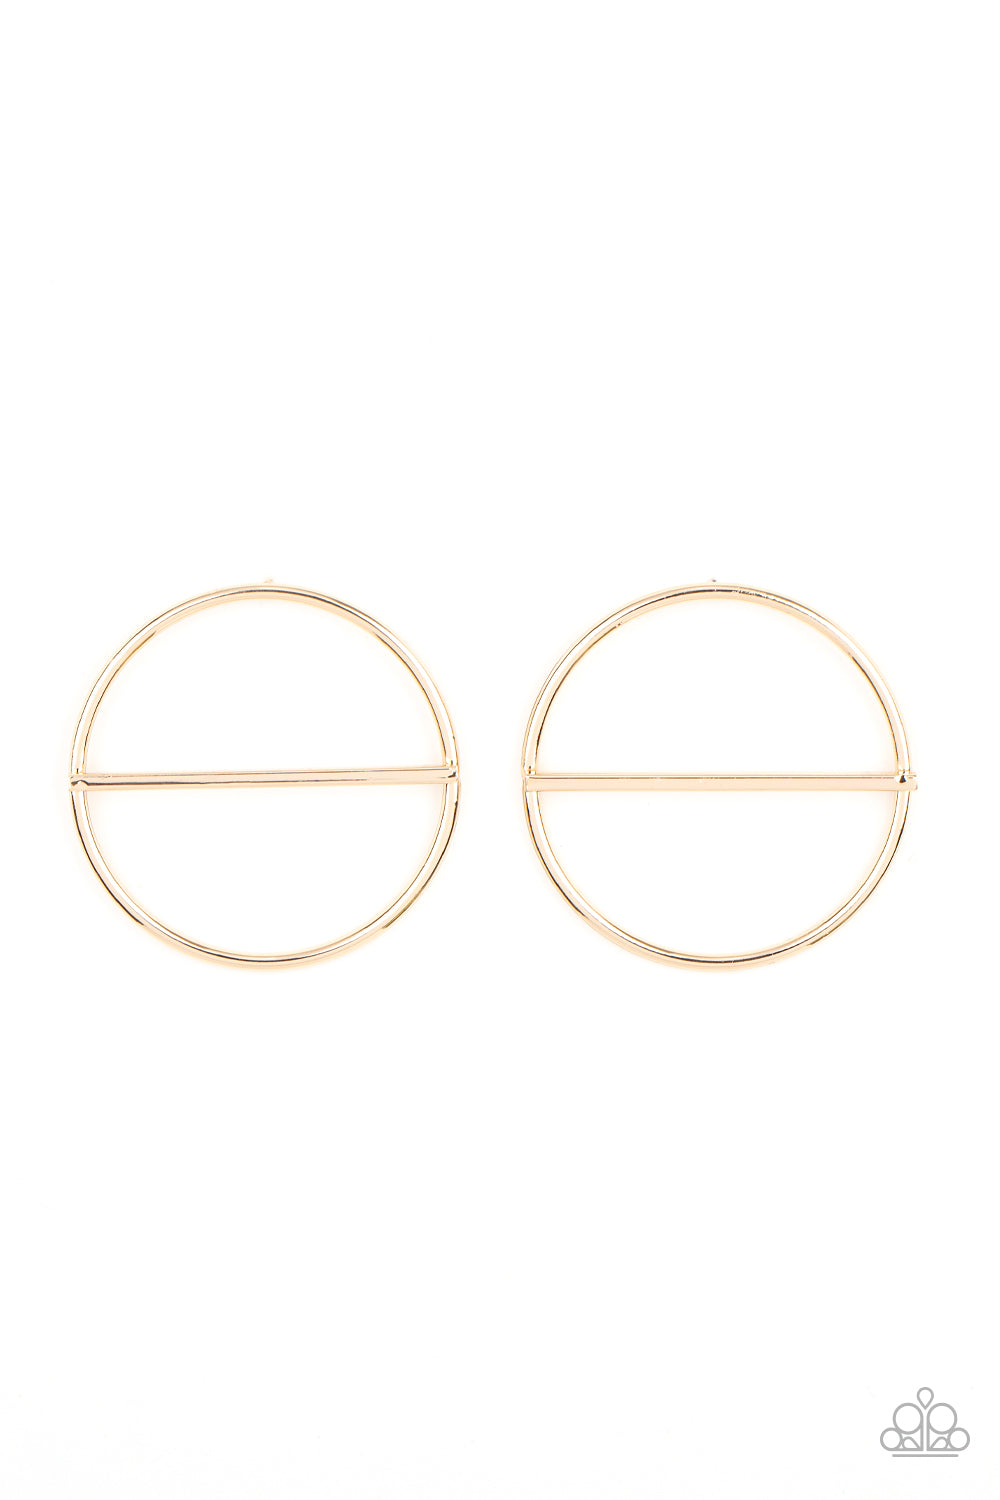 Dynamic Diameter - Gold Earrings - Paparazzi Accessories